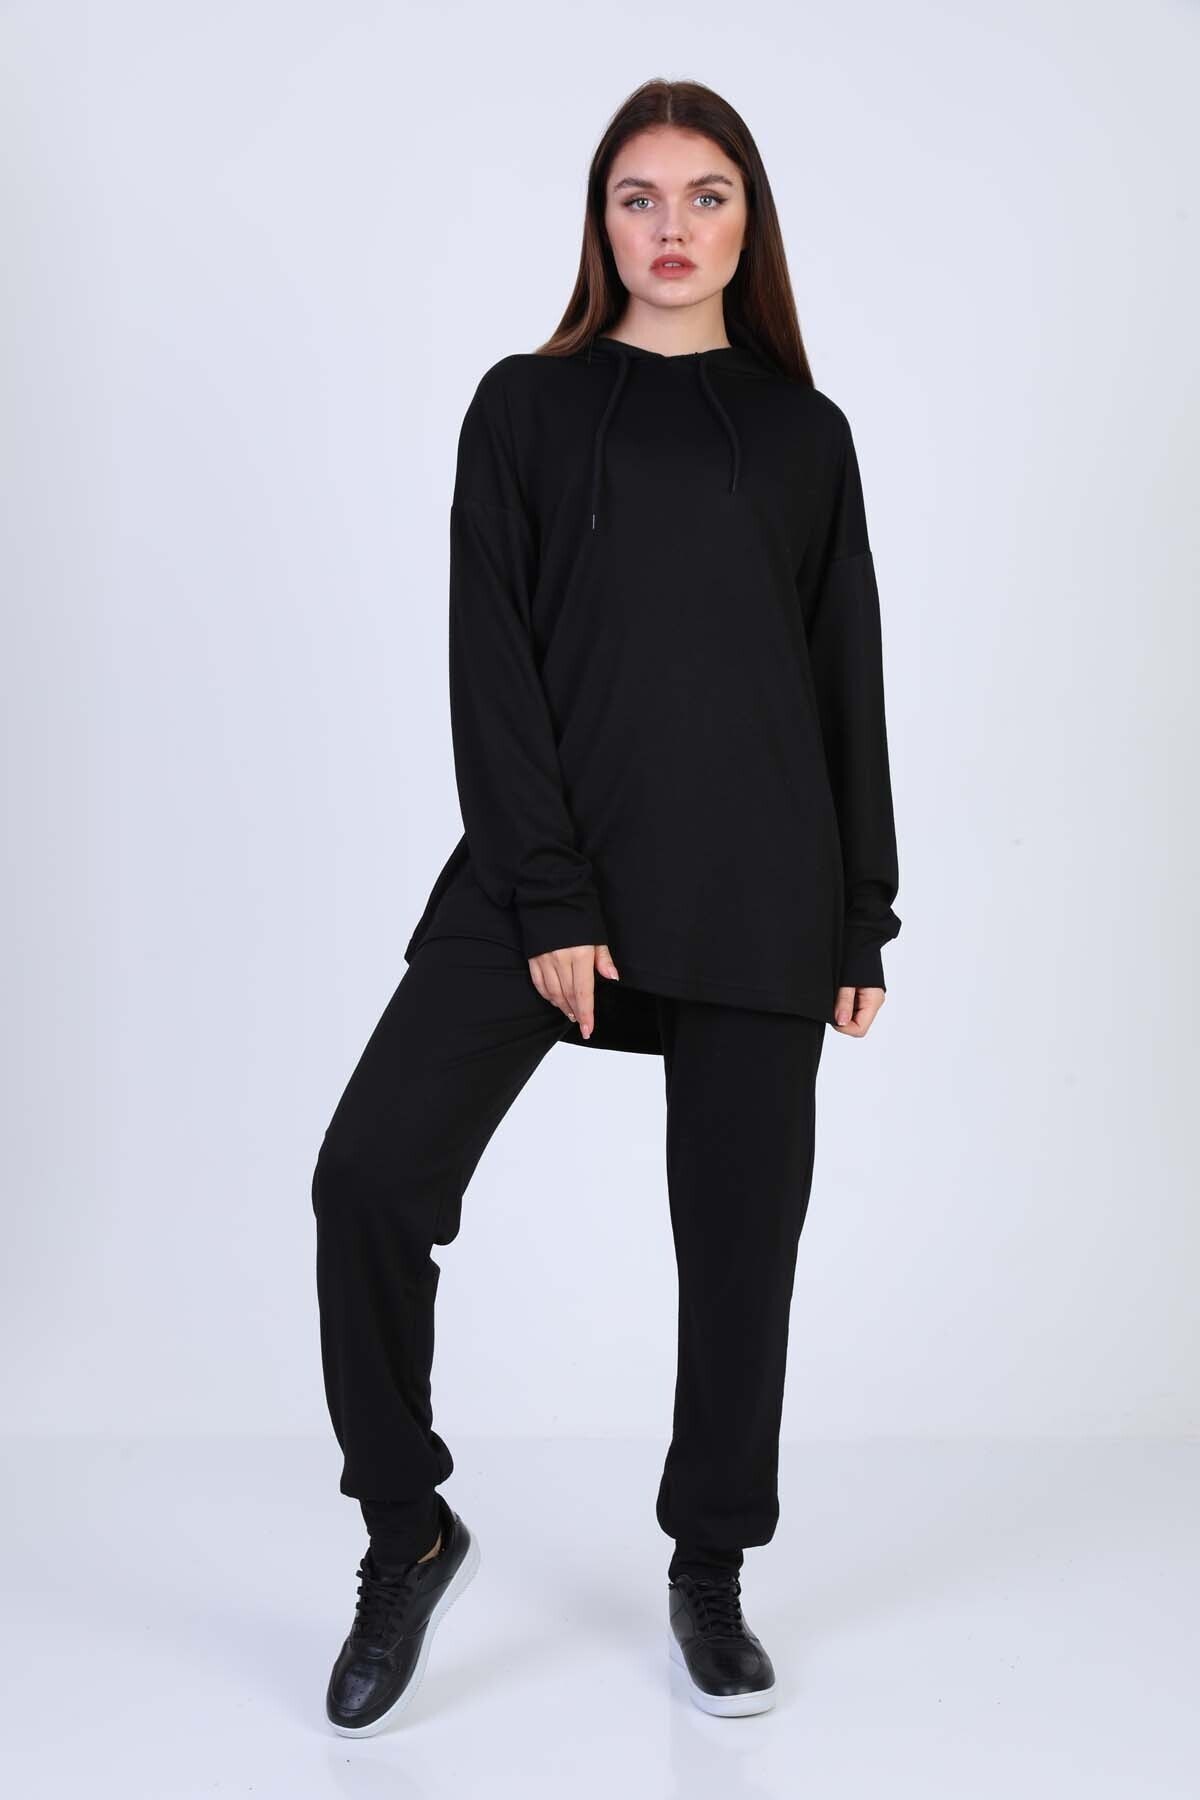 Nare Giyim Siyah Kadın Sweatshirt Eşofman Takımı